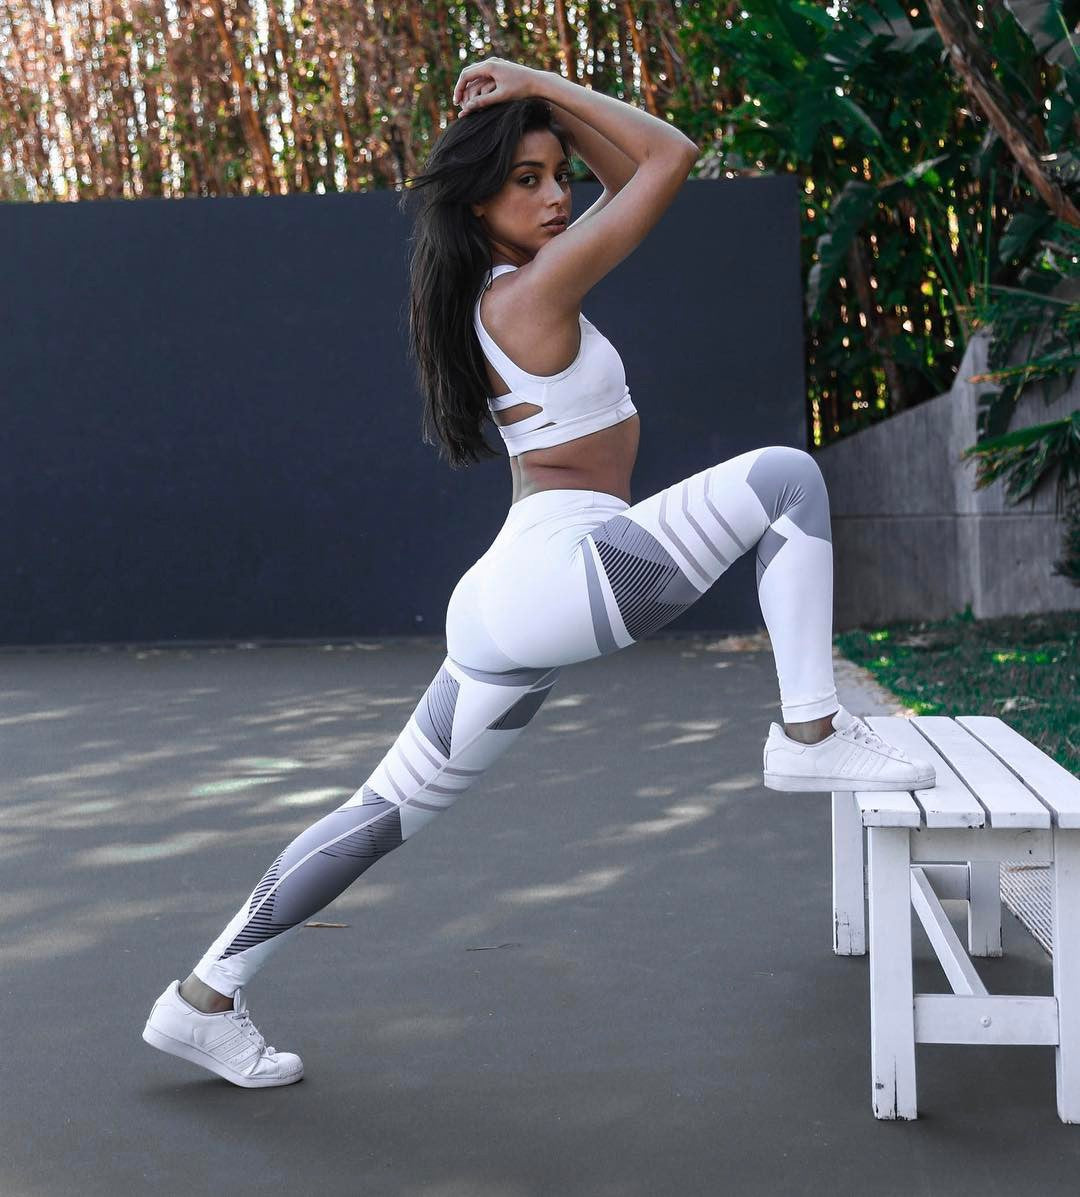 style: 1, Size: M - Reflective Sport Yoga Pants